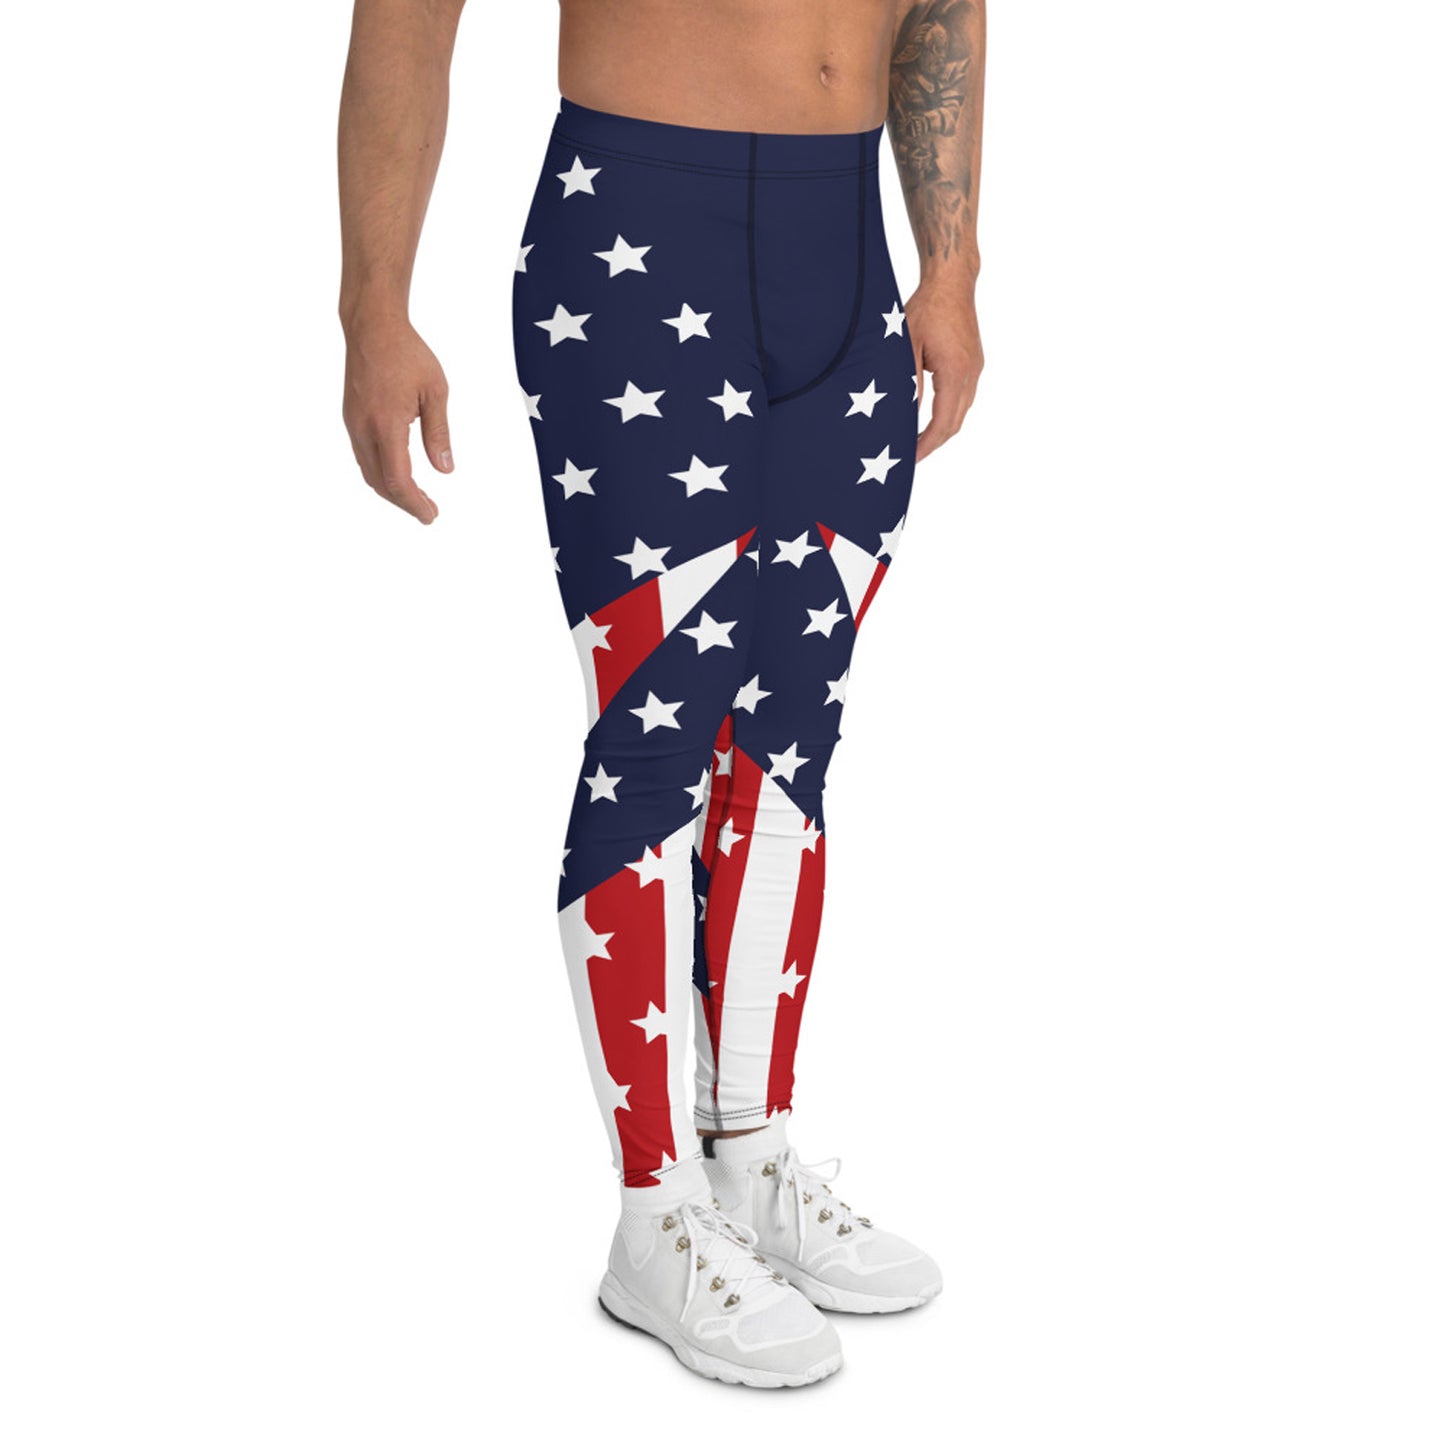 USA Patriot Yoga Pants/Leggings for Men